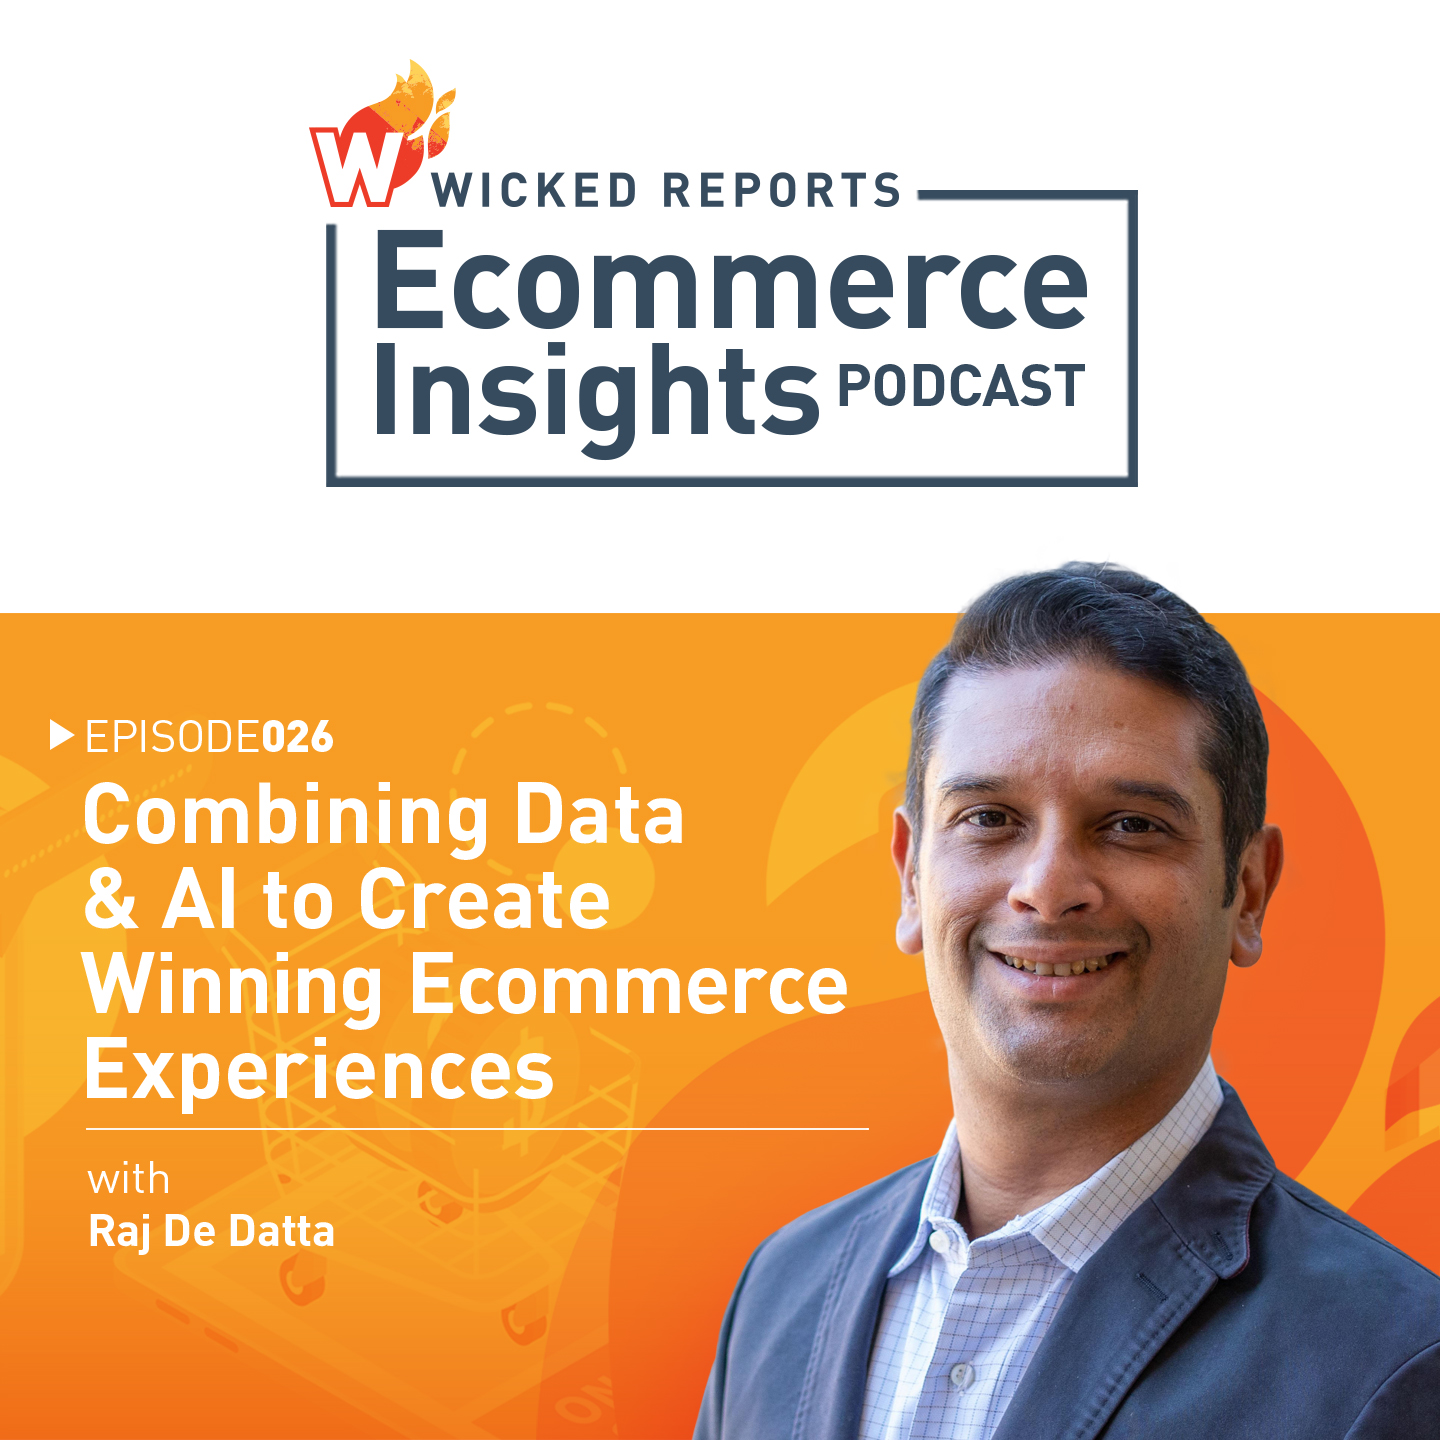 Combining Data & AI to Create Winning Ecommerce Experiences with Raj De Datta